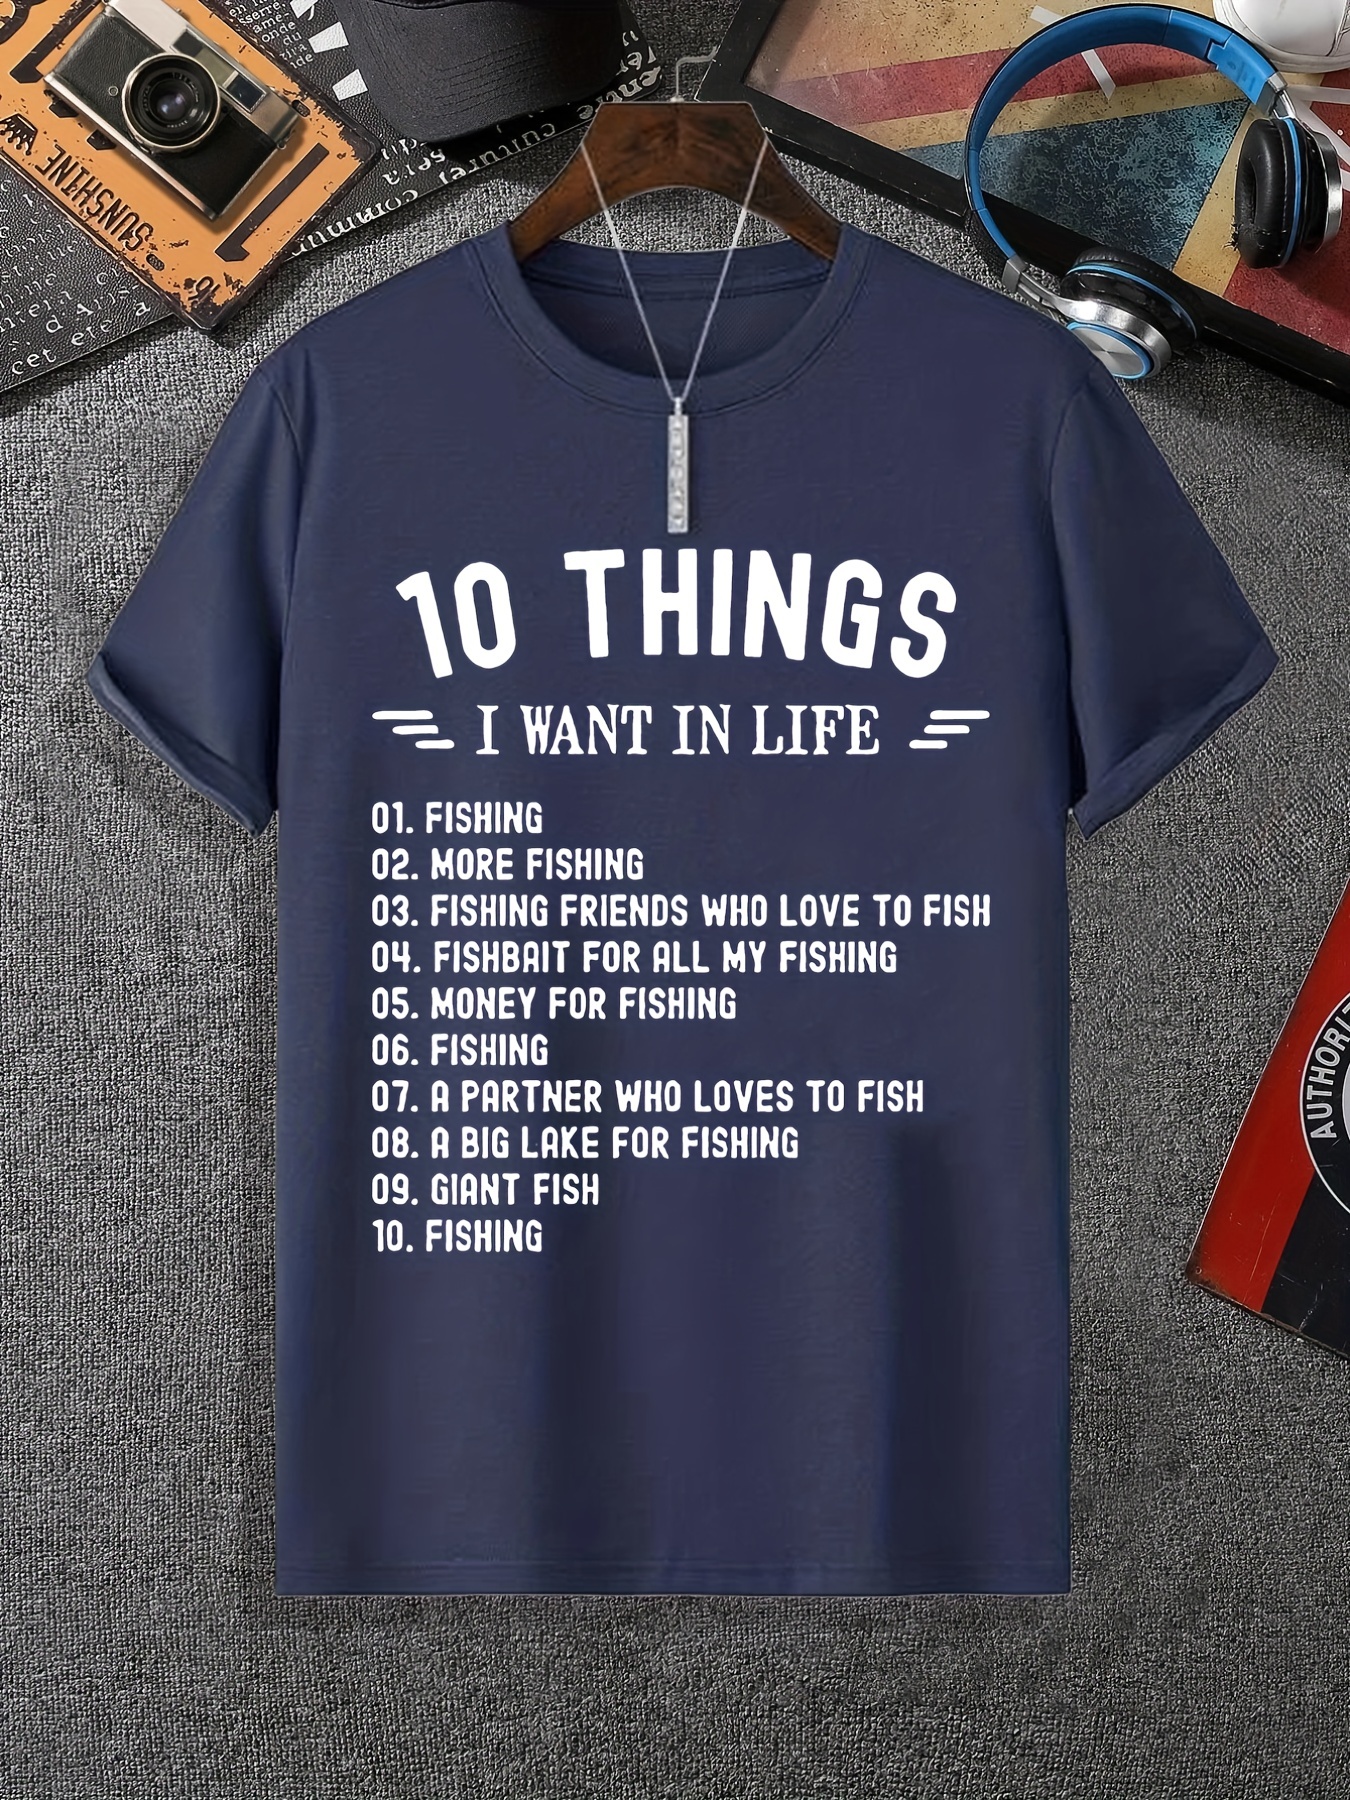 10 Things I Want in Life Fishing Print Men's Fun Casual Short Sleeve Crew Neck T-Shirt, Fashion Graphic Tee Loungewear Pajamas Top Summer Men's